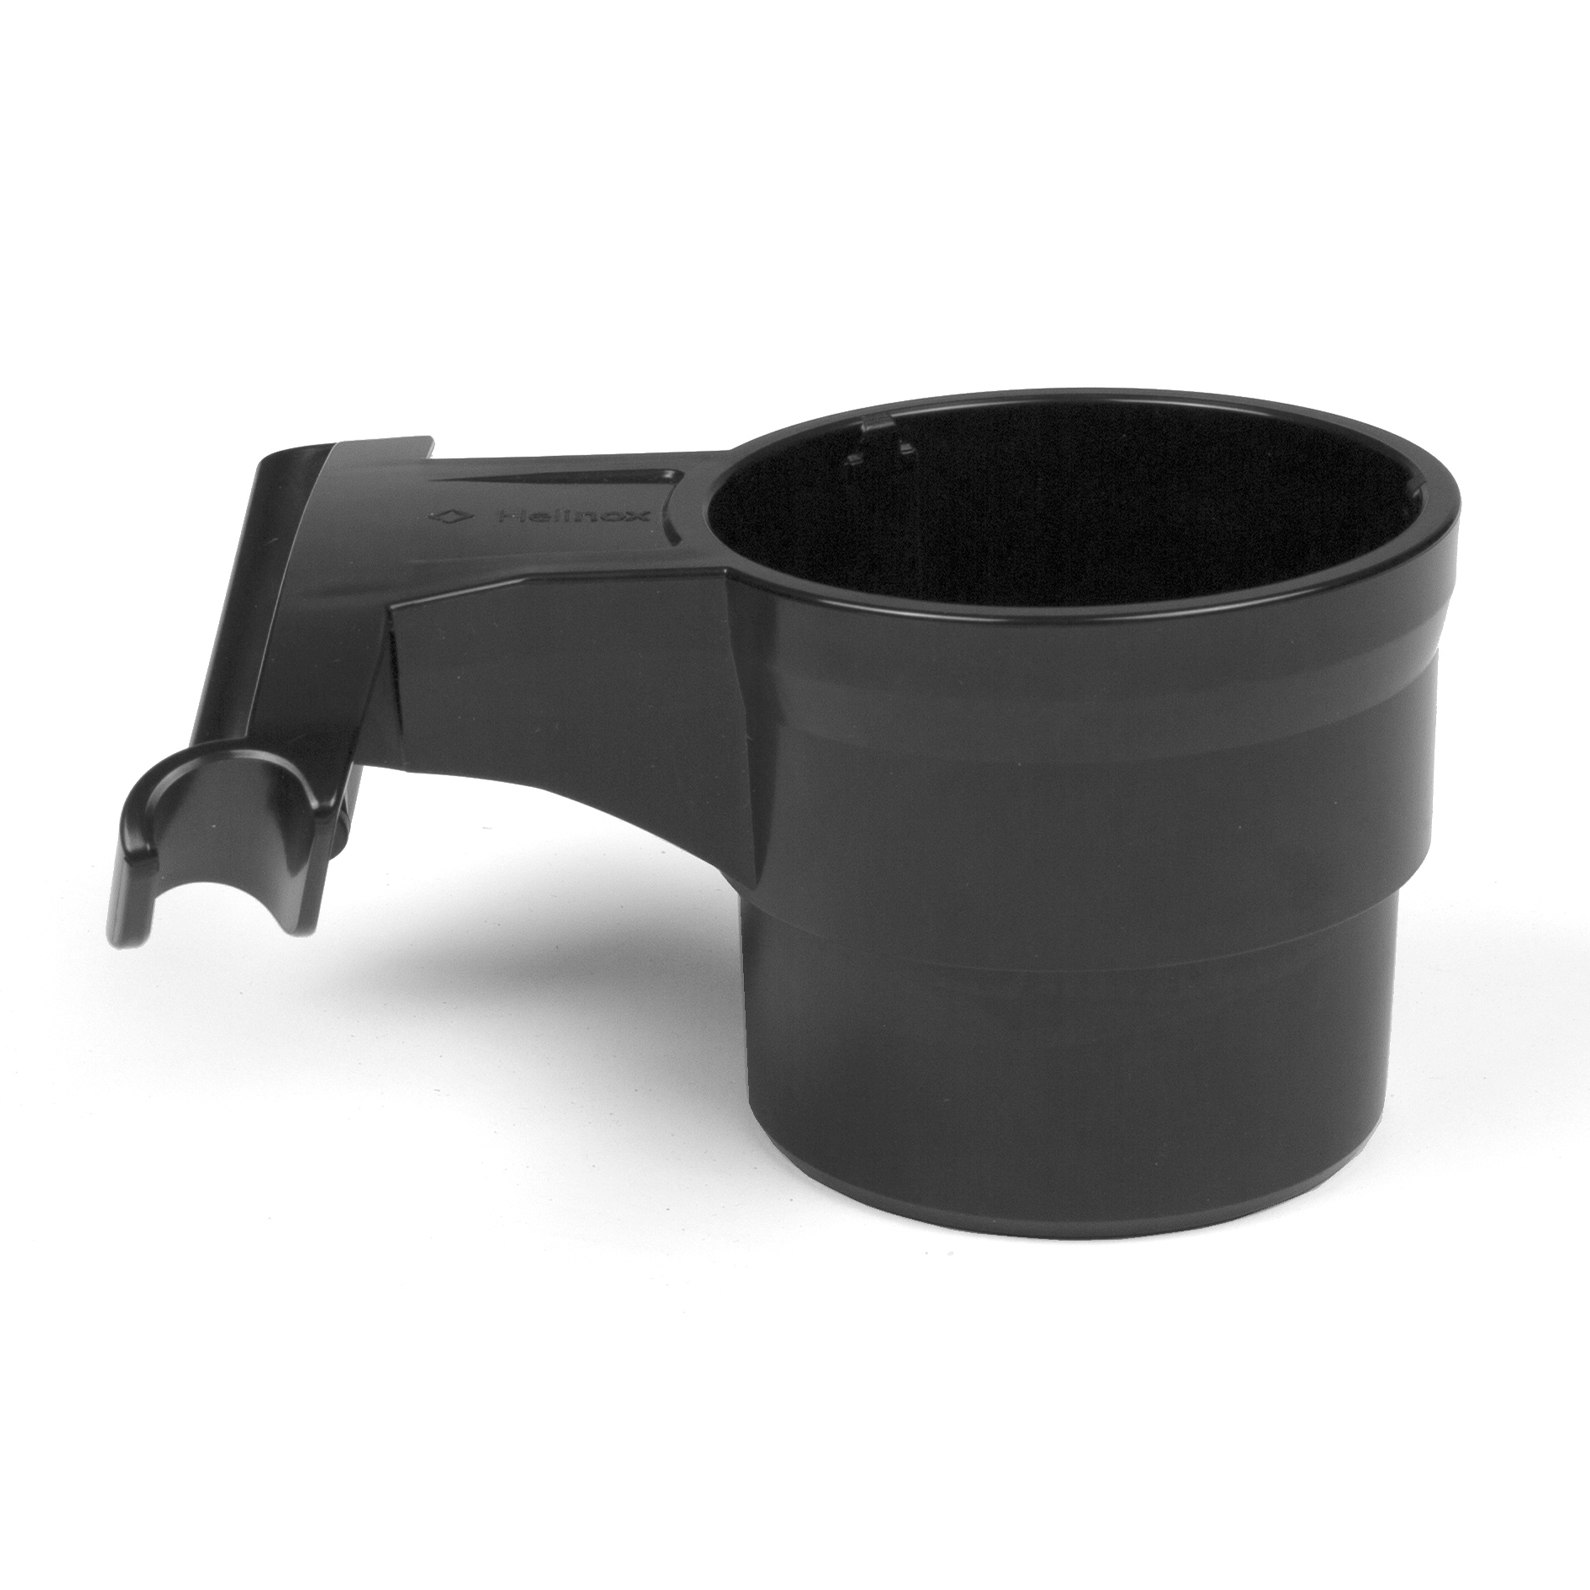 Productfoto van Helinox Cup Holder - Plastic version